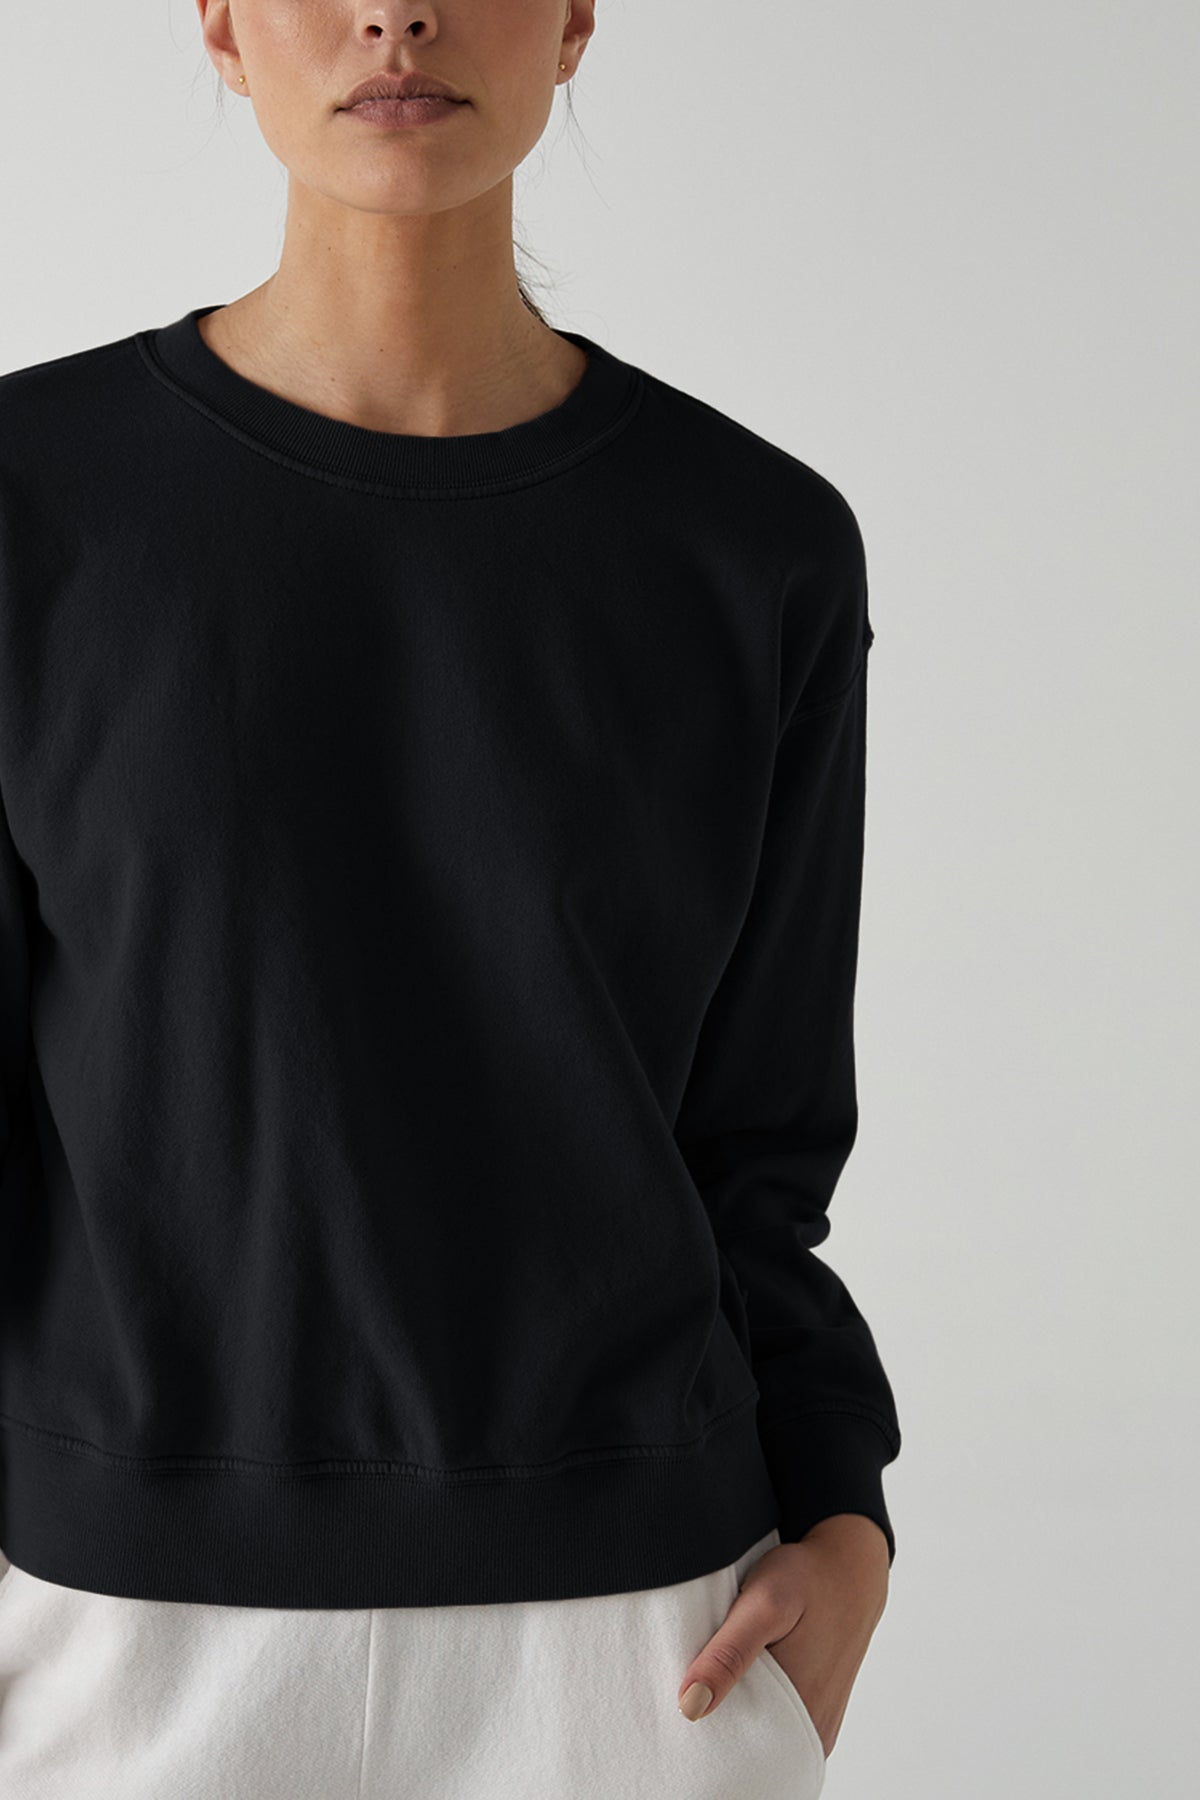 ynez sweatshirt black front detail and zuma pant beach-24344307925185